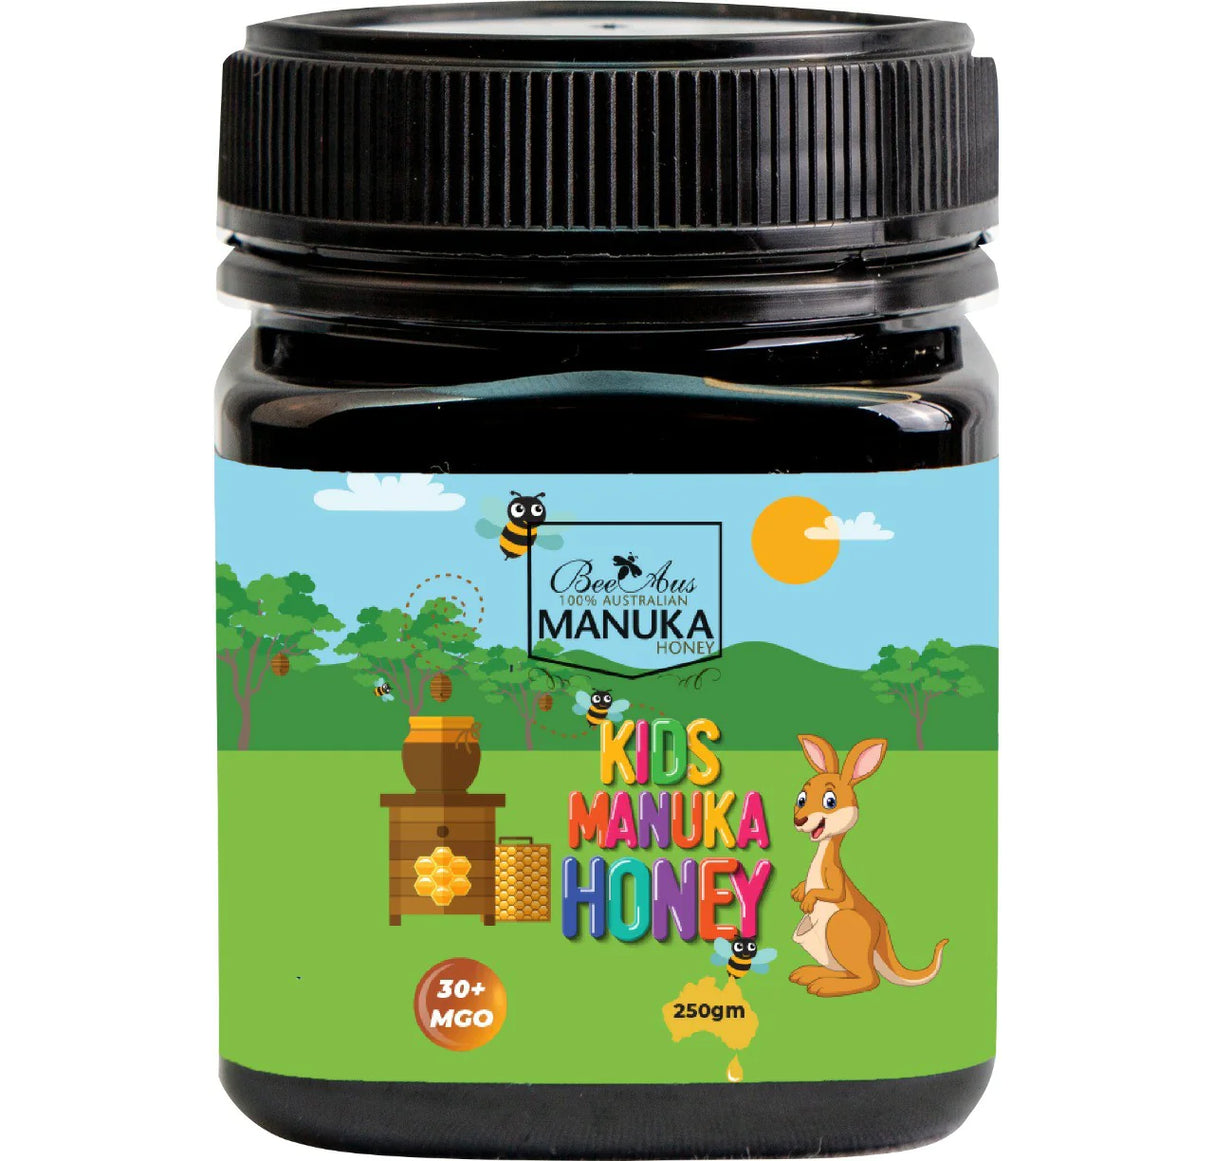 Manuka Honey for Kids MGO 30+ 250g